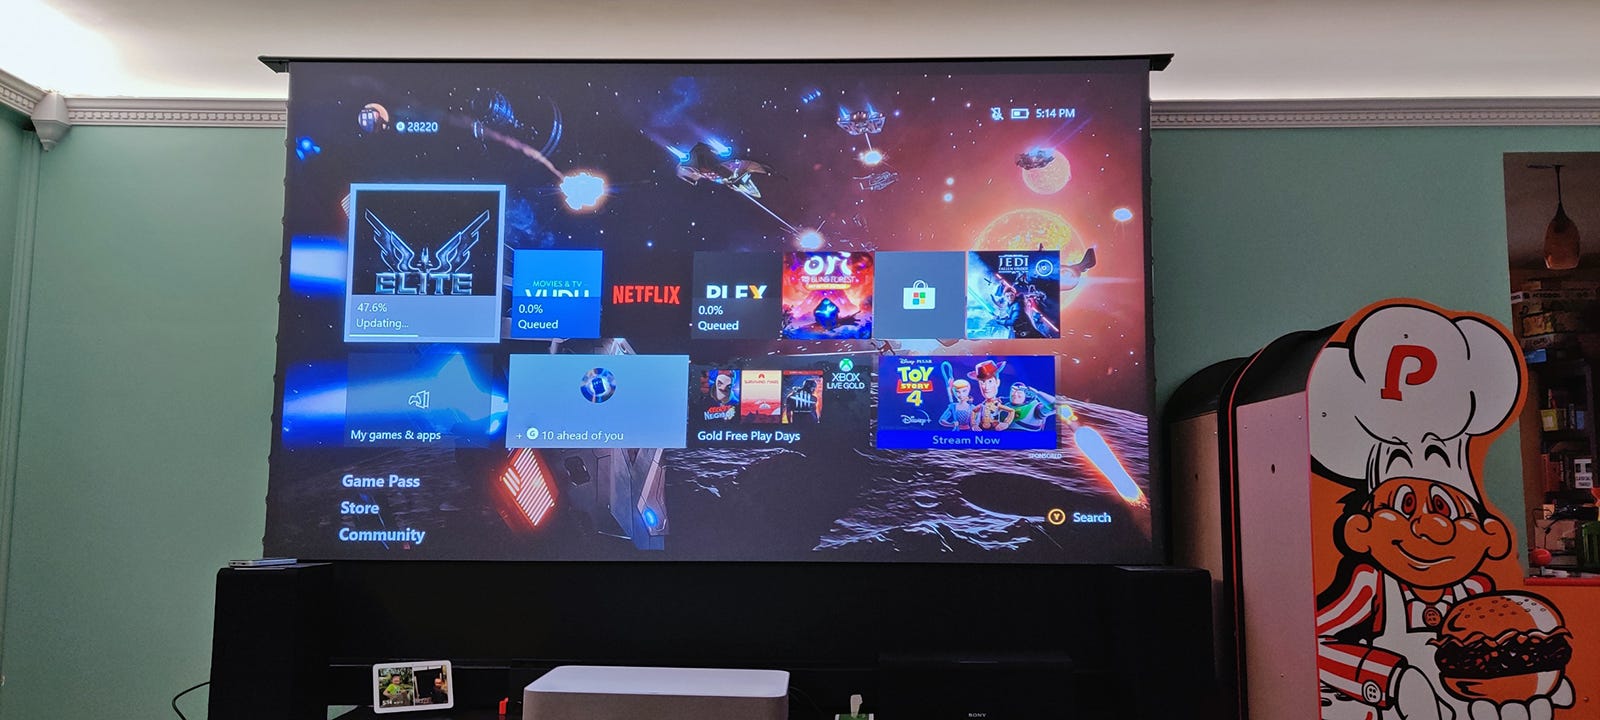 Layar 100 inci raksasa menunjukkan layar utama Xbox di ruangan yang cukup terang.